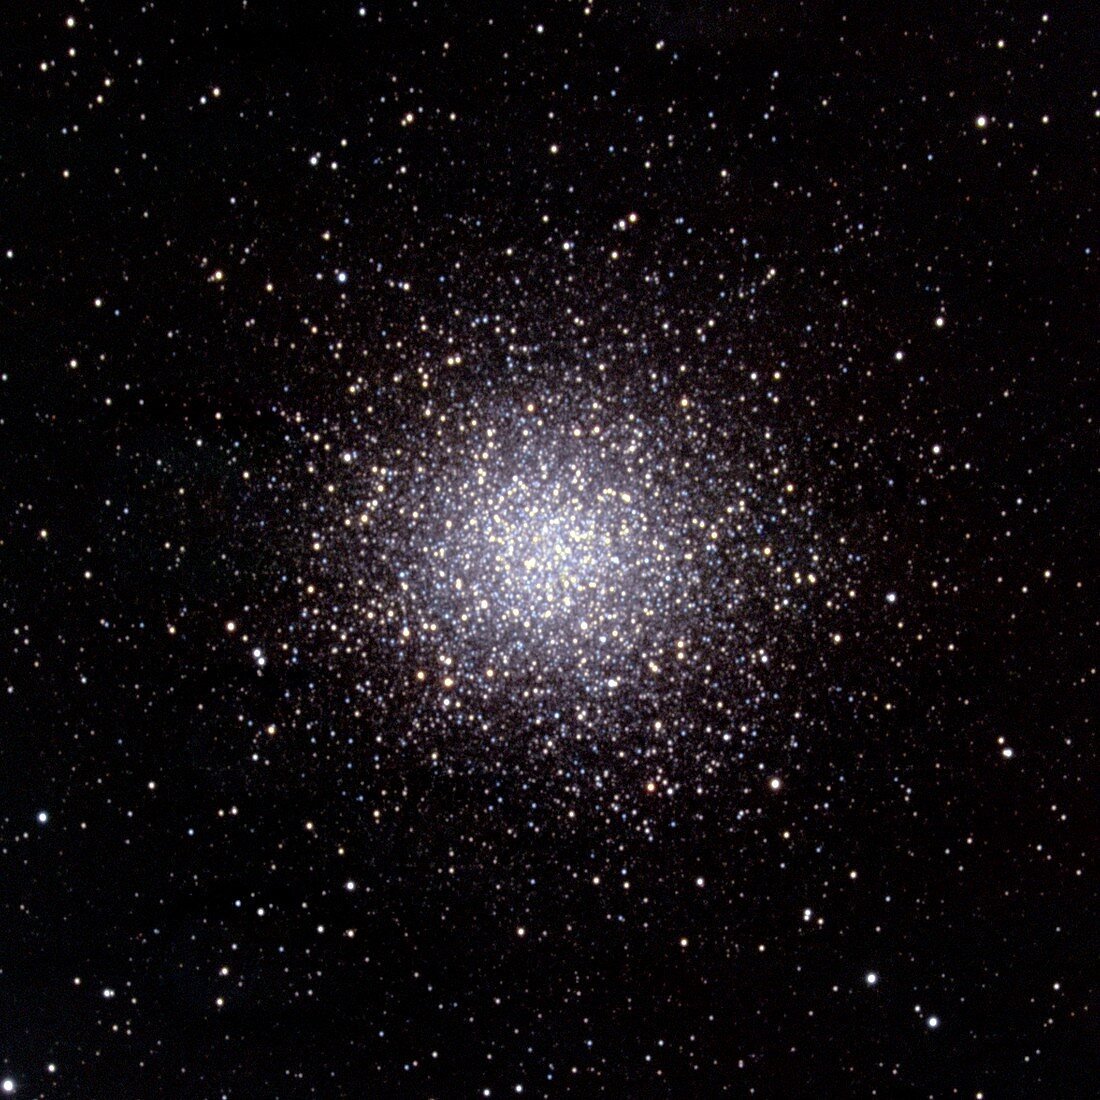 Globular cluster M14